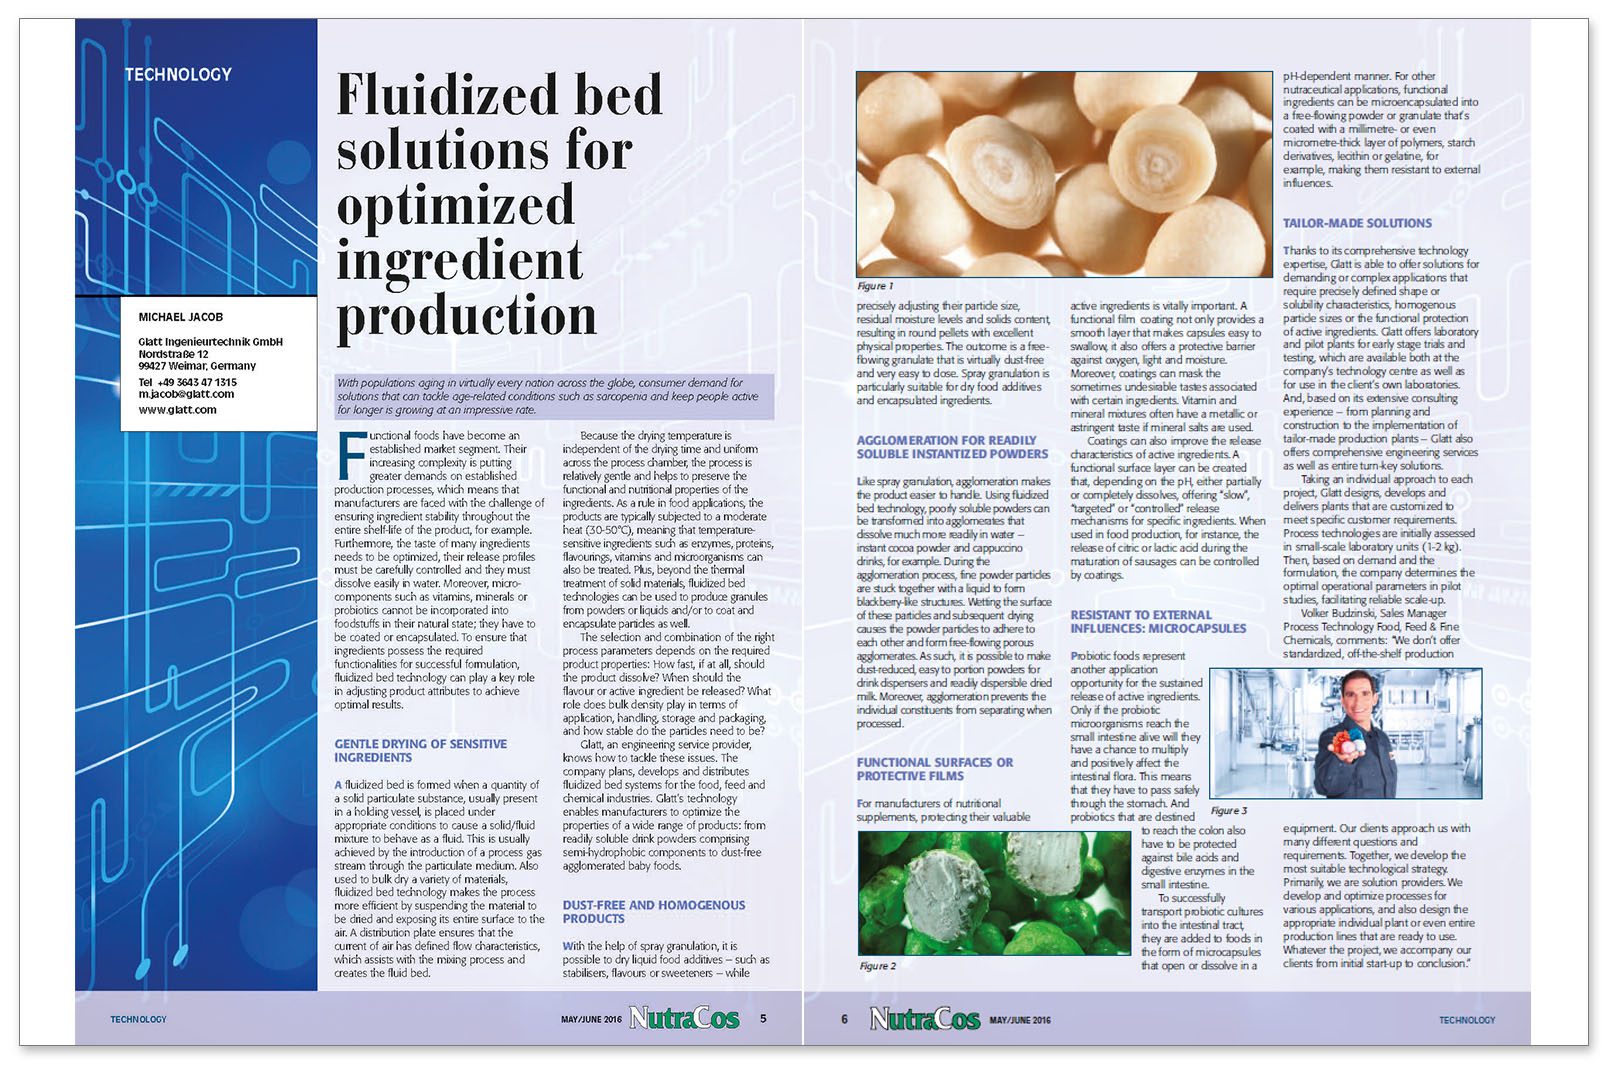 Glatt Fachbeitrag zum Thema "Fluidized bed solutions for optimized ingredient production", veröffentlicht im Fachmagazin 'NutraCos', Ausgabe 03/2016, B5 S.r.l.